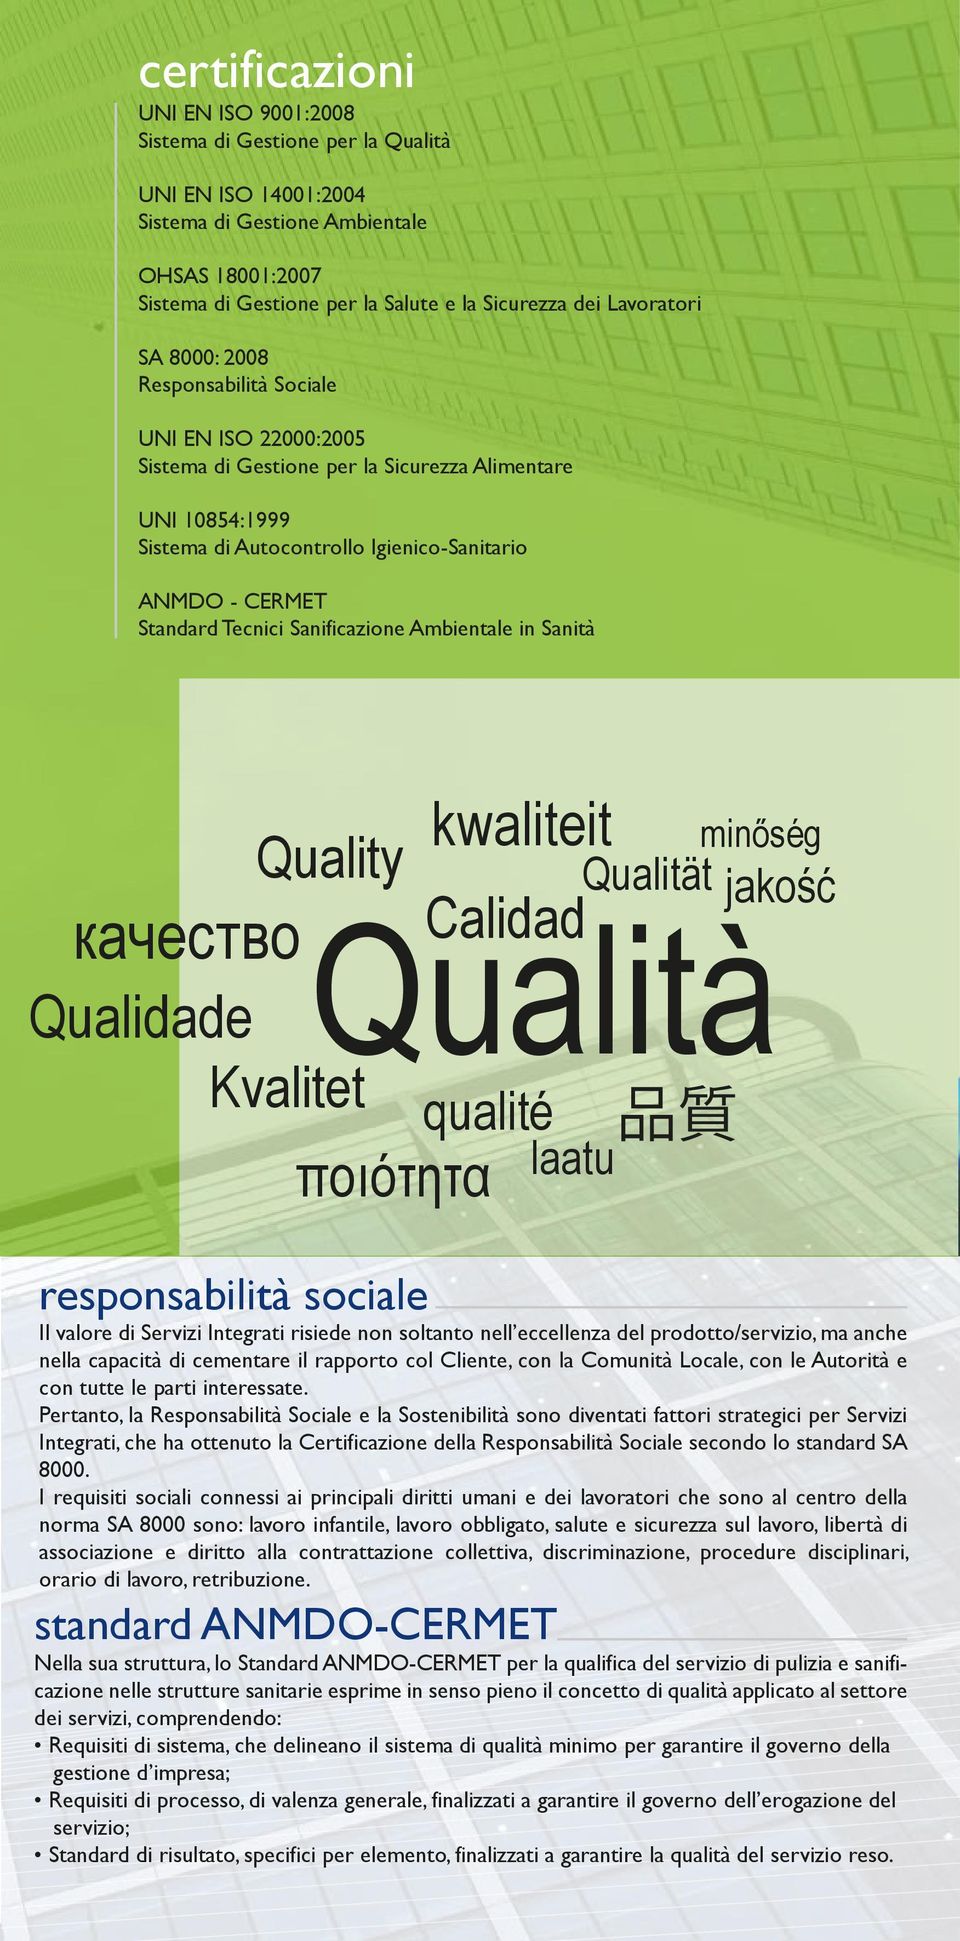 Standard Tecnici Sanificazione Ambientale in Sanità качество Quality kwaliteit Qualità Qualidade Kvalitet qualité ποιότητα Qualität Calidad laatu minőség jakość responsabilità sociale Il valore di